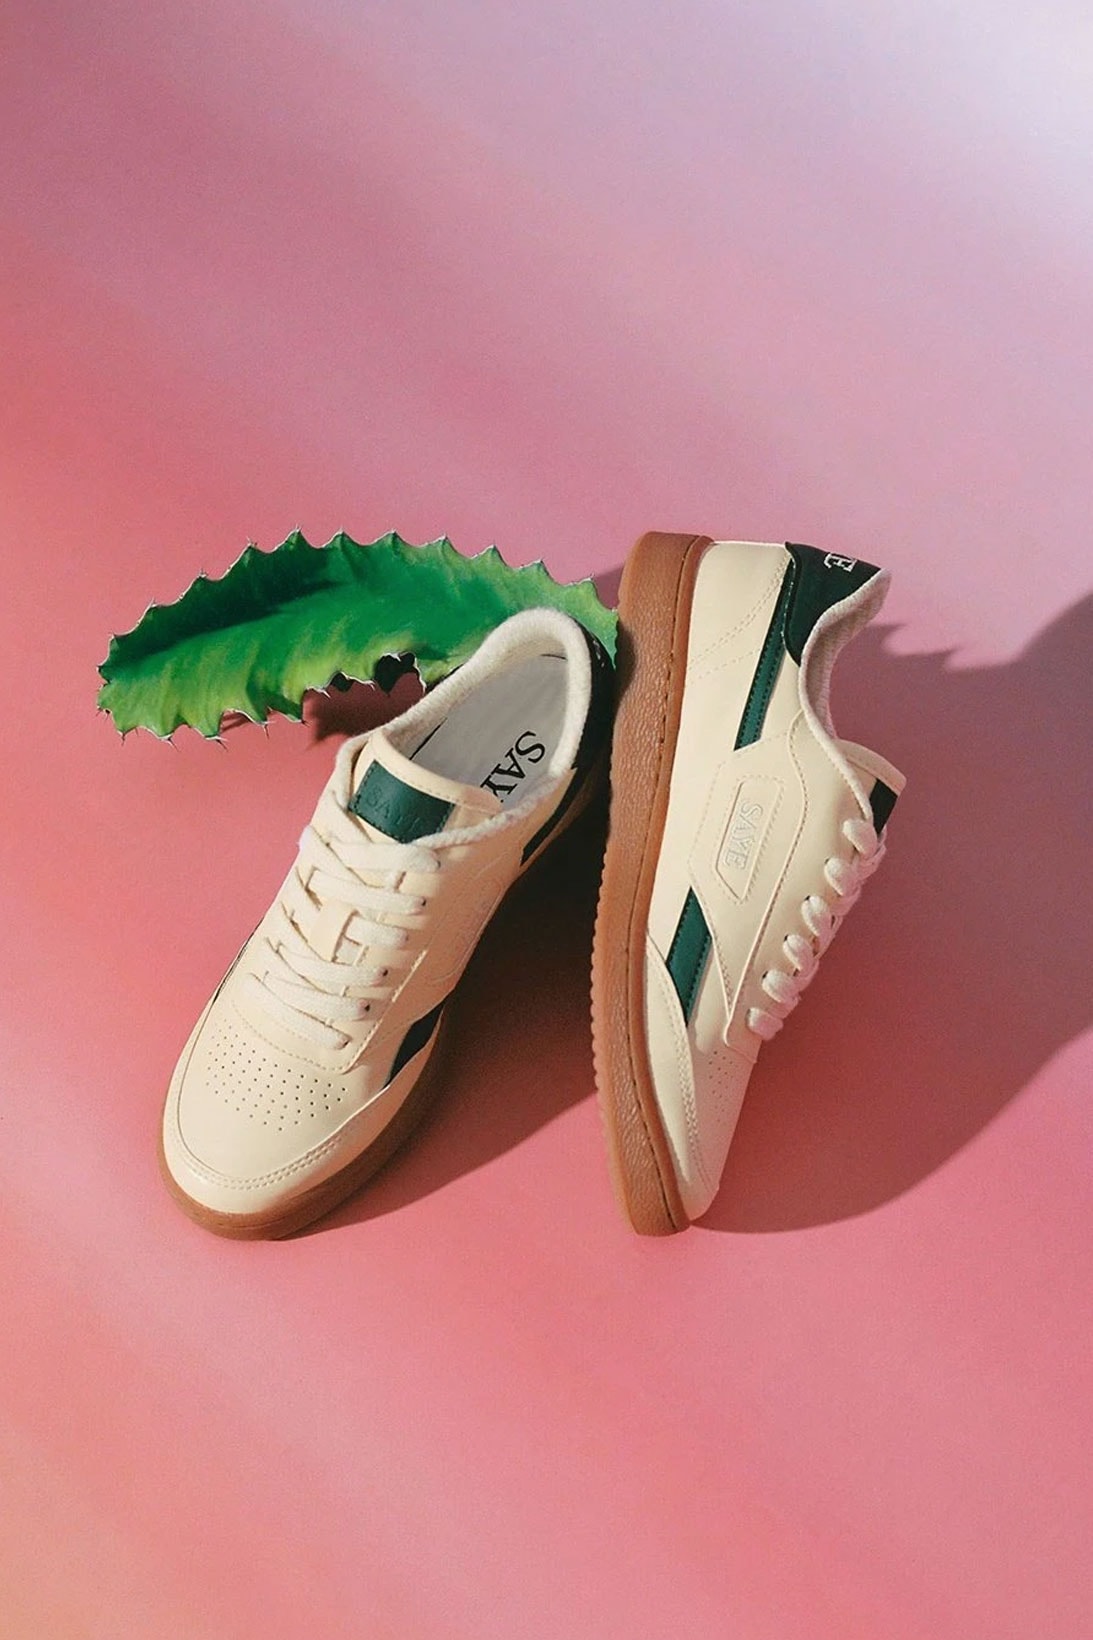 SAYE M89 Vegan Cactus Sustainable Sneakers Details Shoes